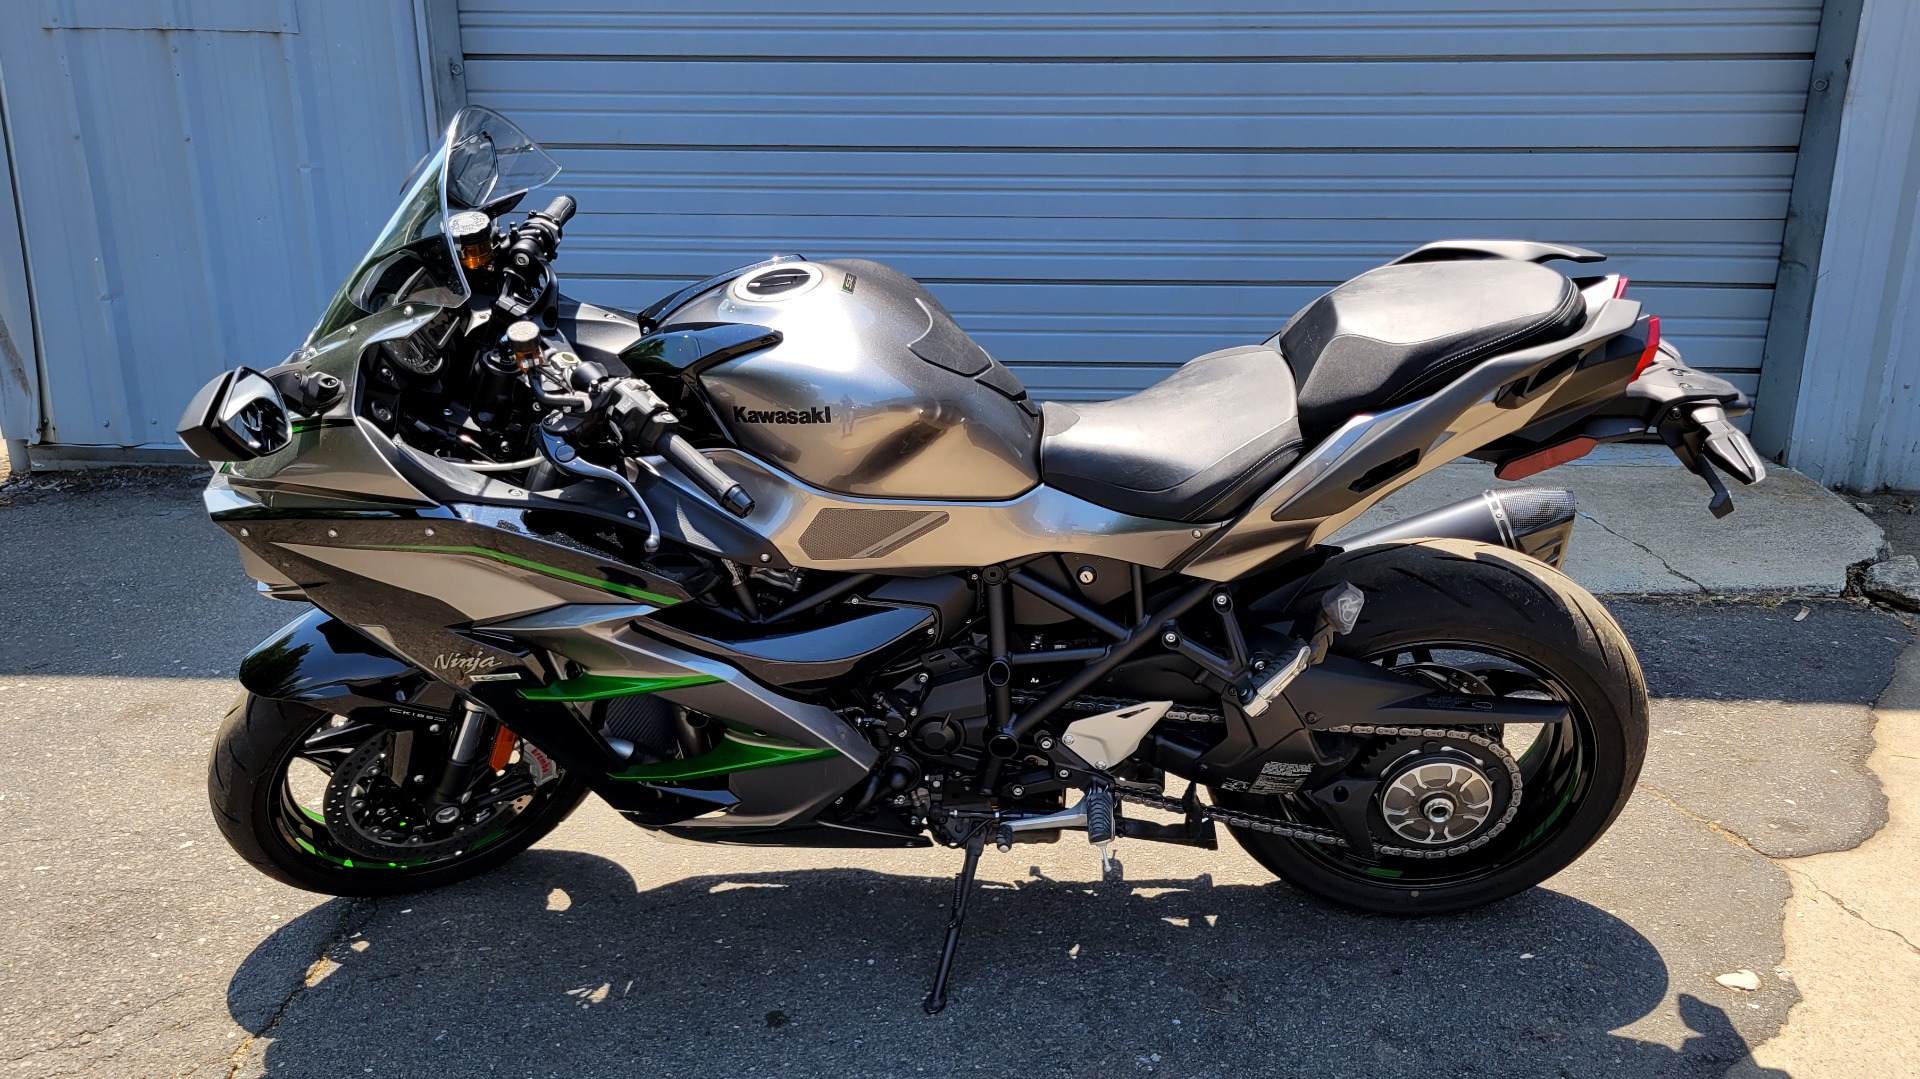 Used 2019 Kawasaki NINJA H2 SX / 998CC 197HP / SPORT TOURING MOTORCYCLE for sale $23,000 at Formula Imports in Charlotte NC 28227 1